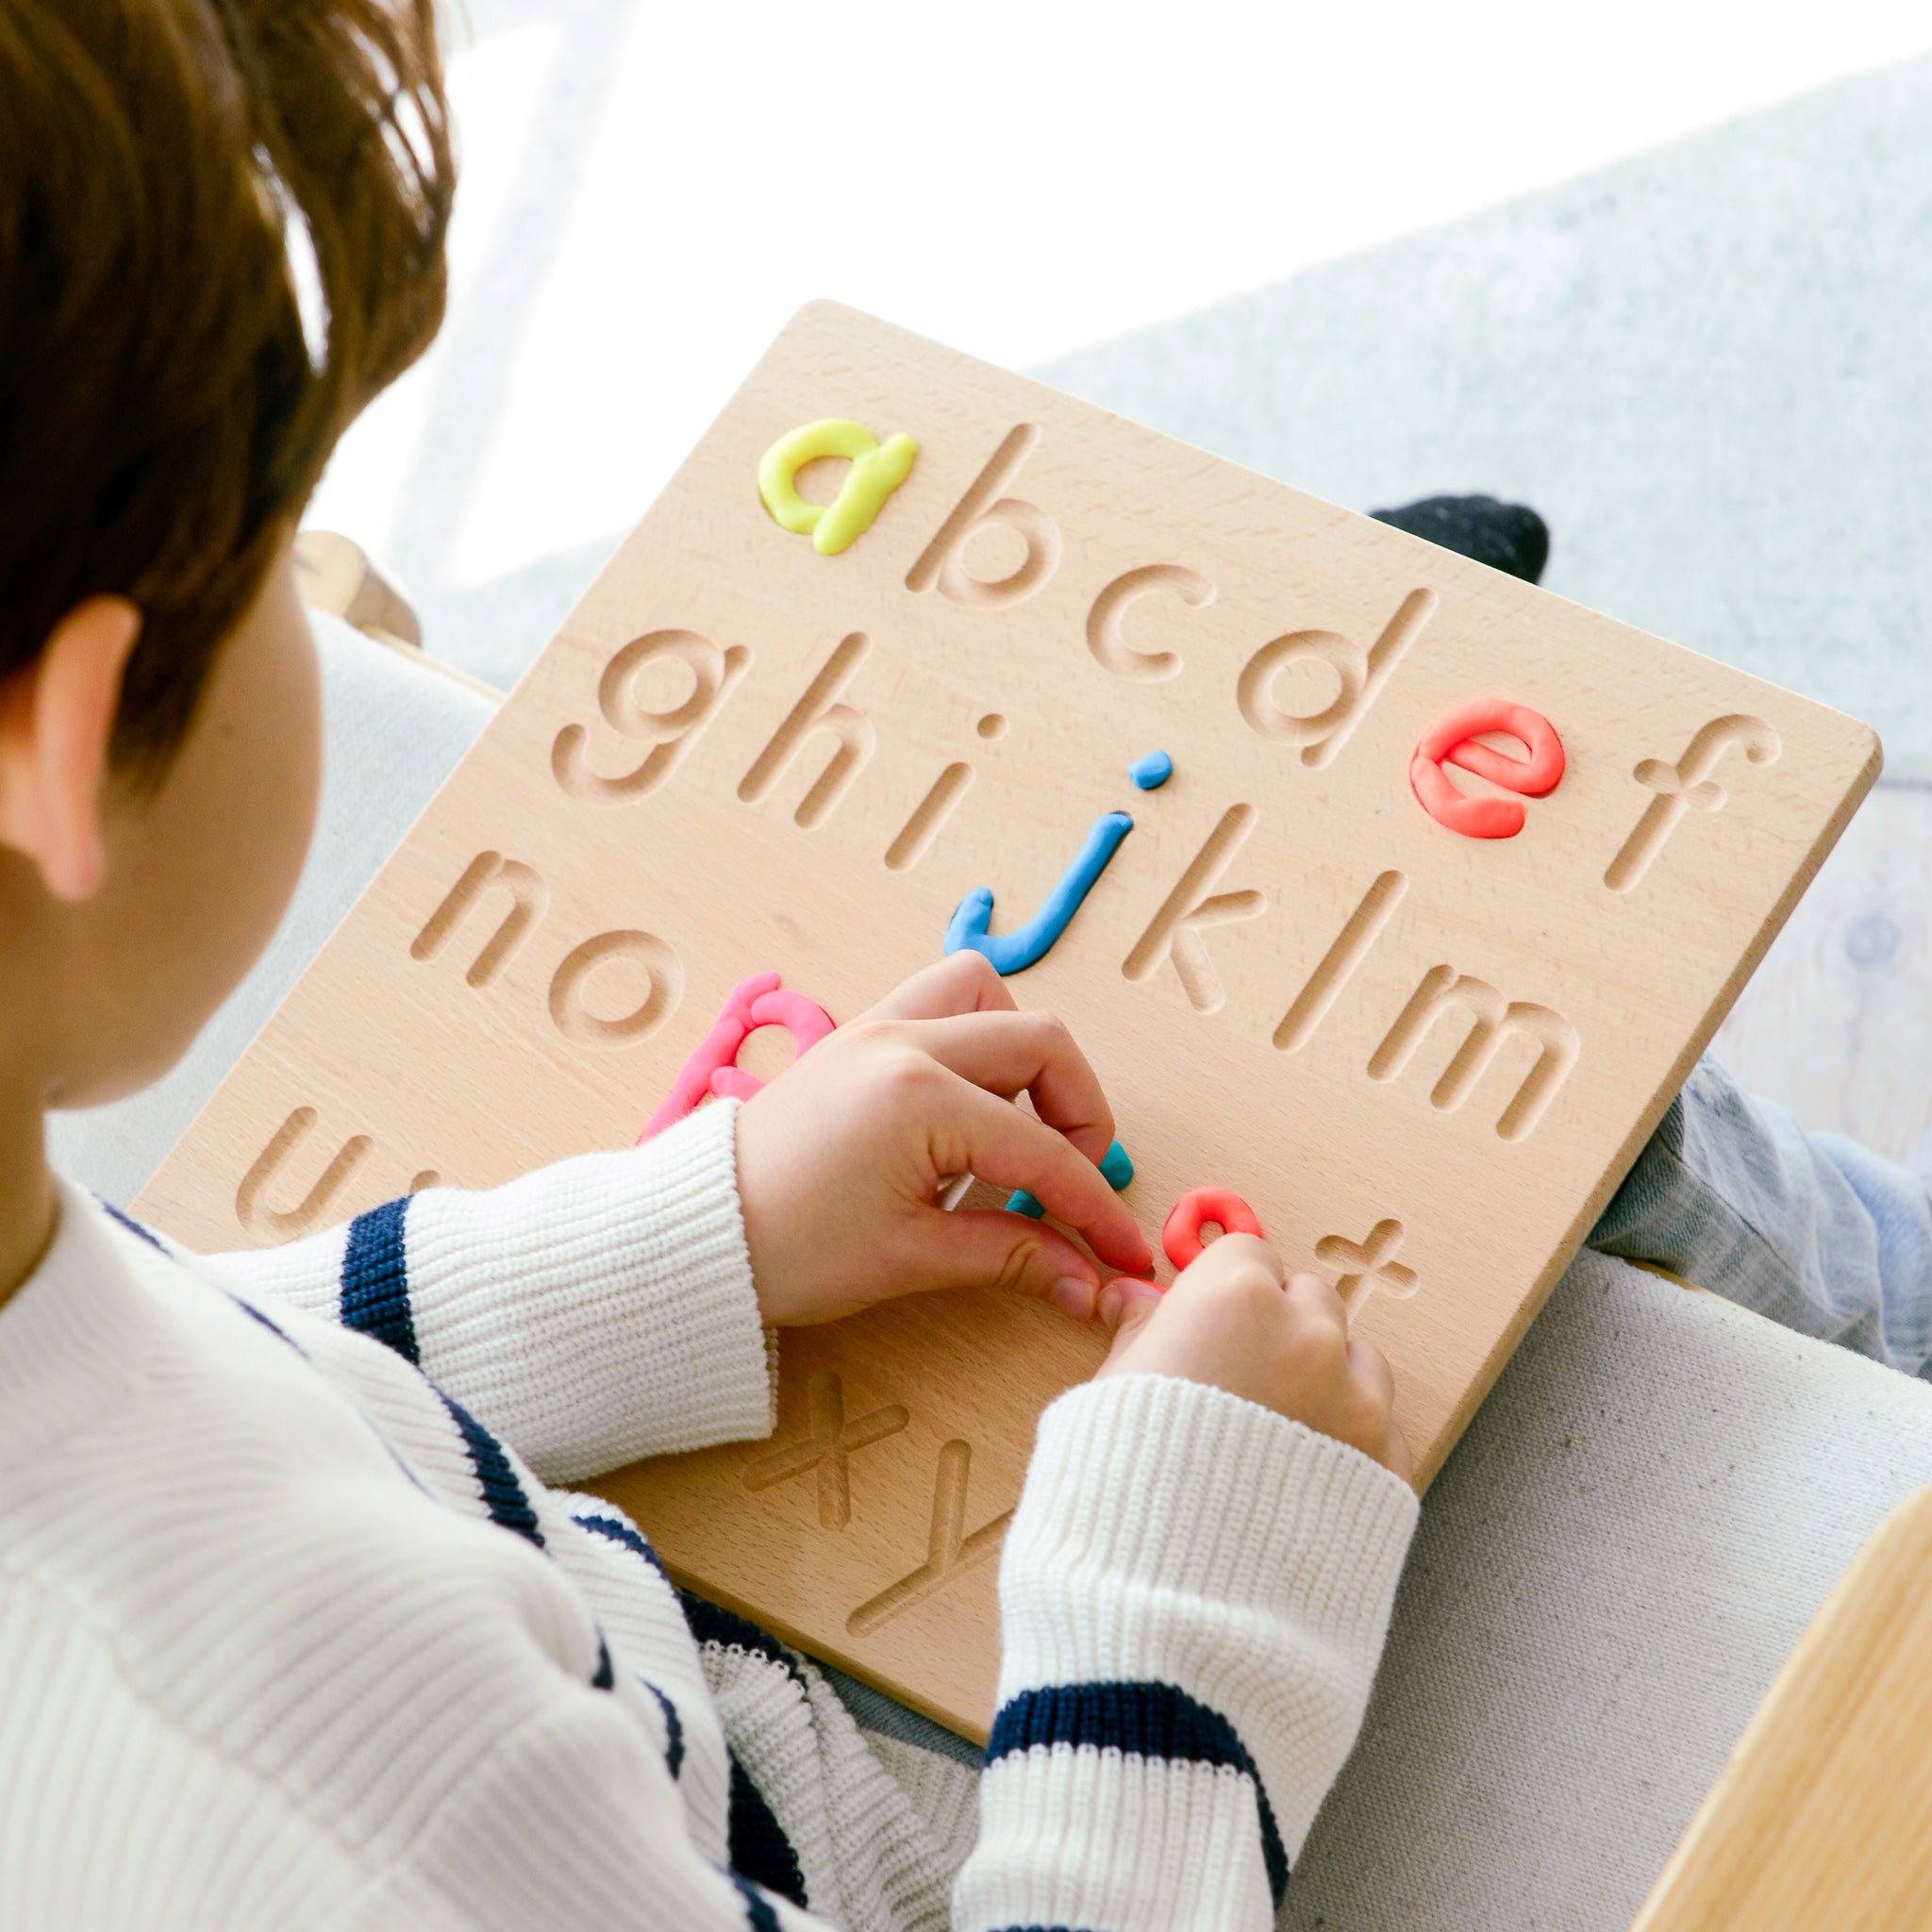 Wooden Montessori Alphabet Tracing Board | BLUE GINKGO